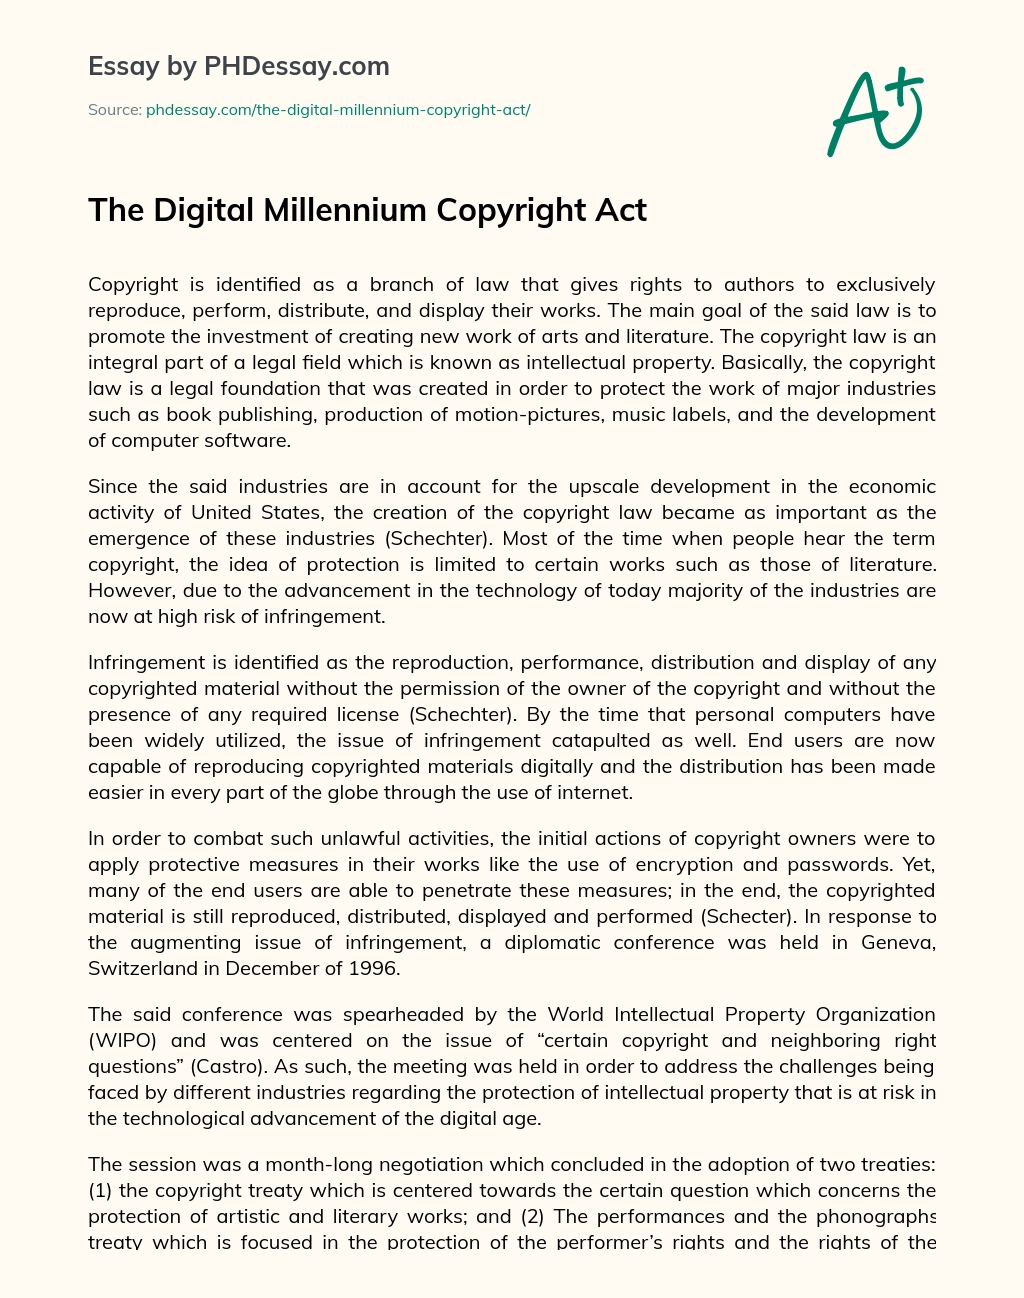 The Digital Millennium Copyright Act essay